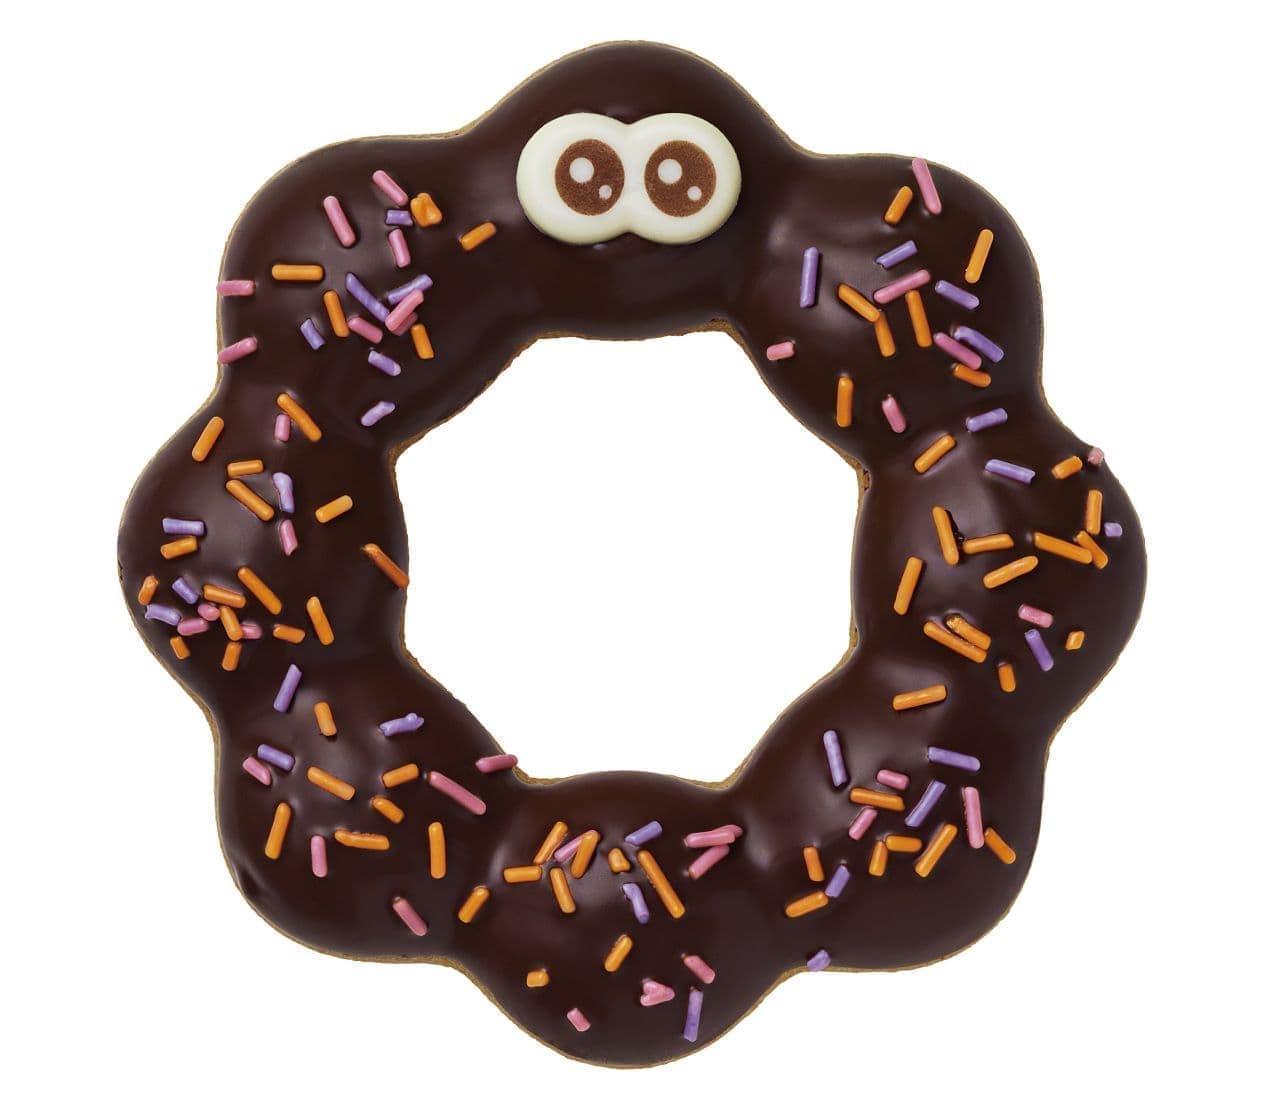 Mr. Donut "Pon de Choco Devil".